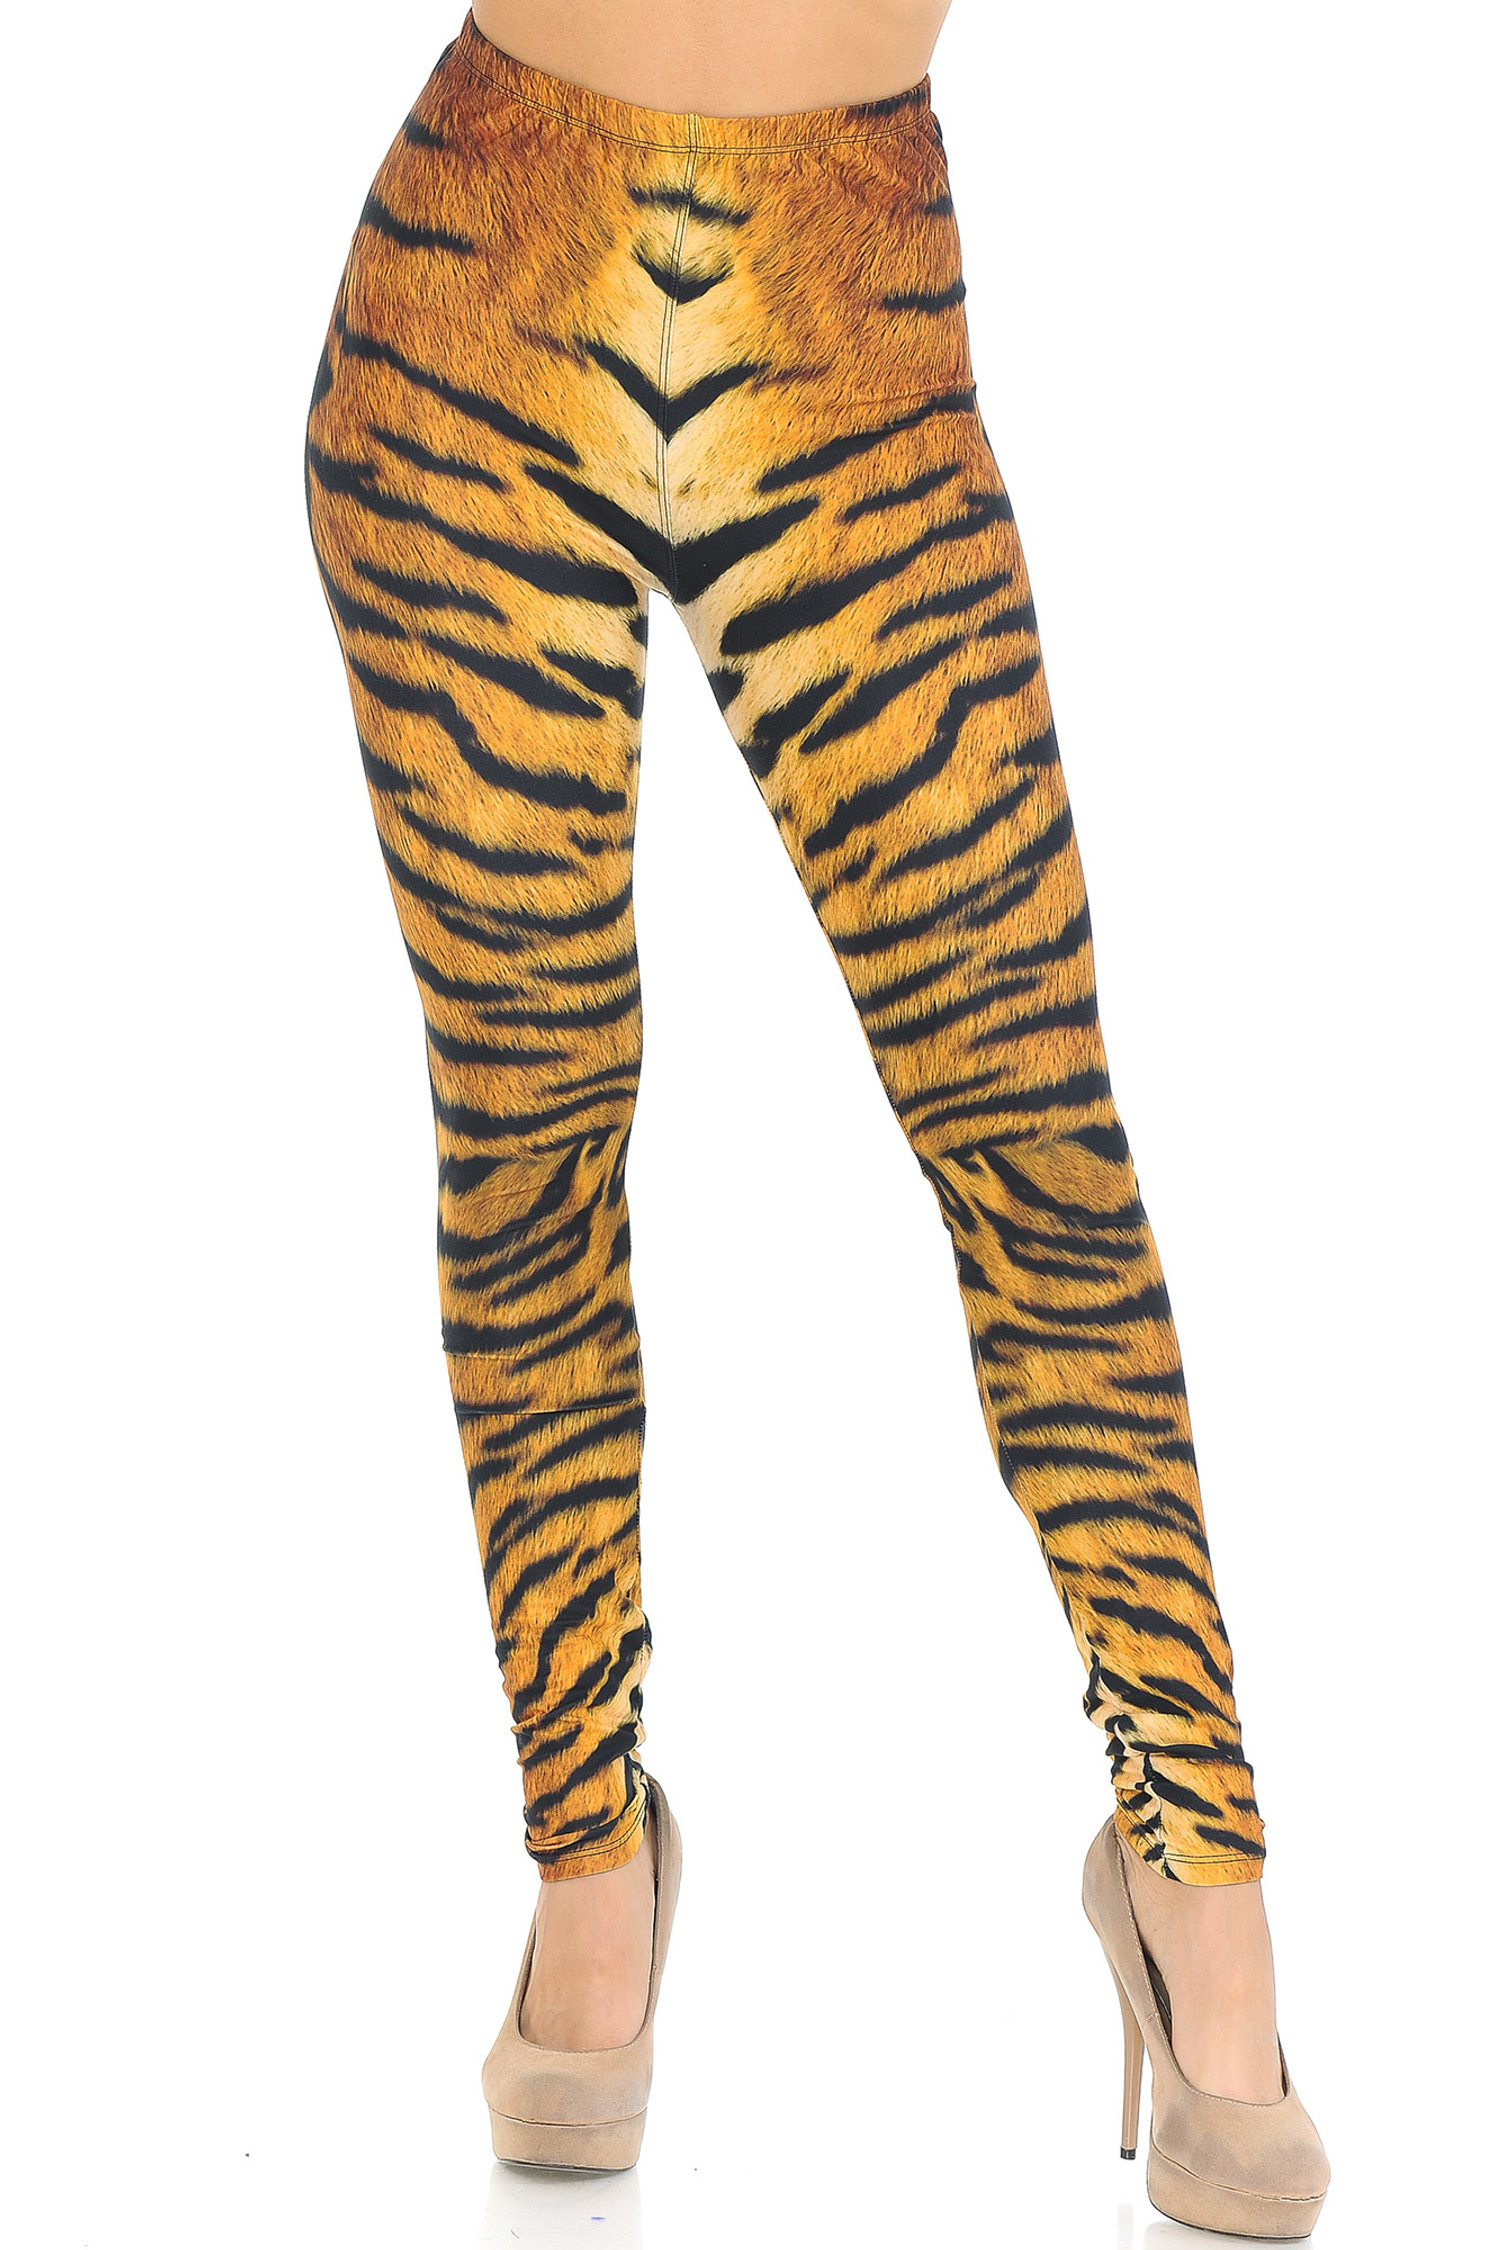 Creamy Soft Tiger Print Leggings - USA Fashion™